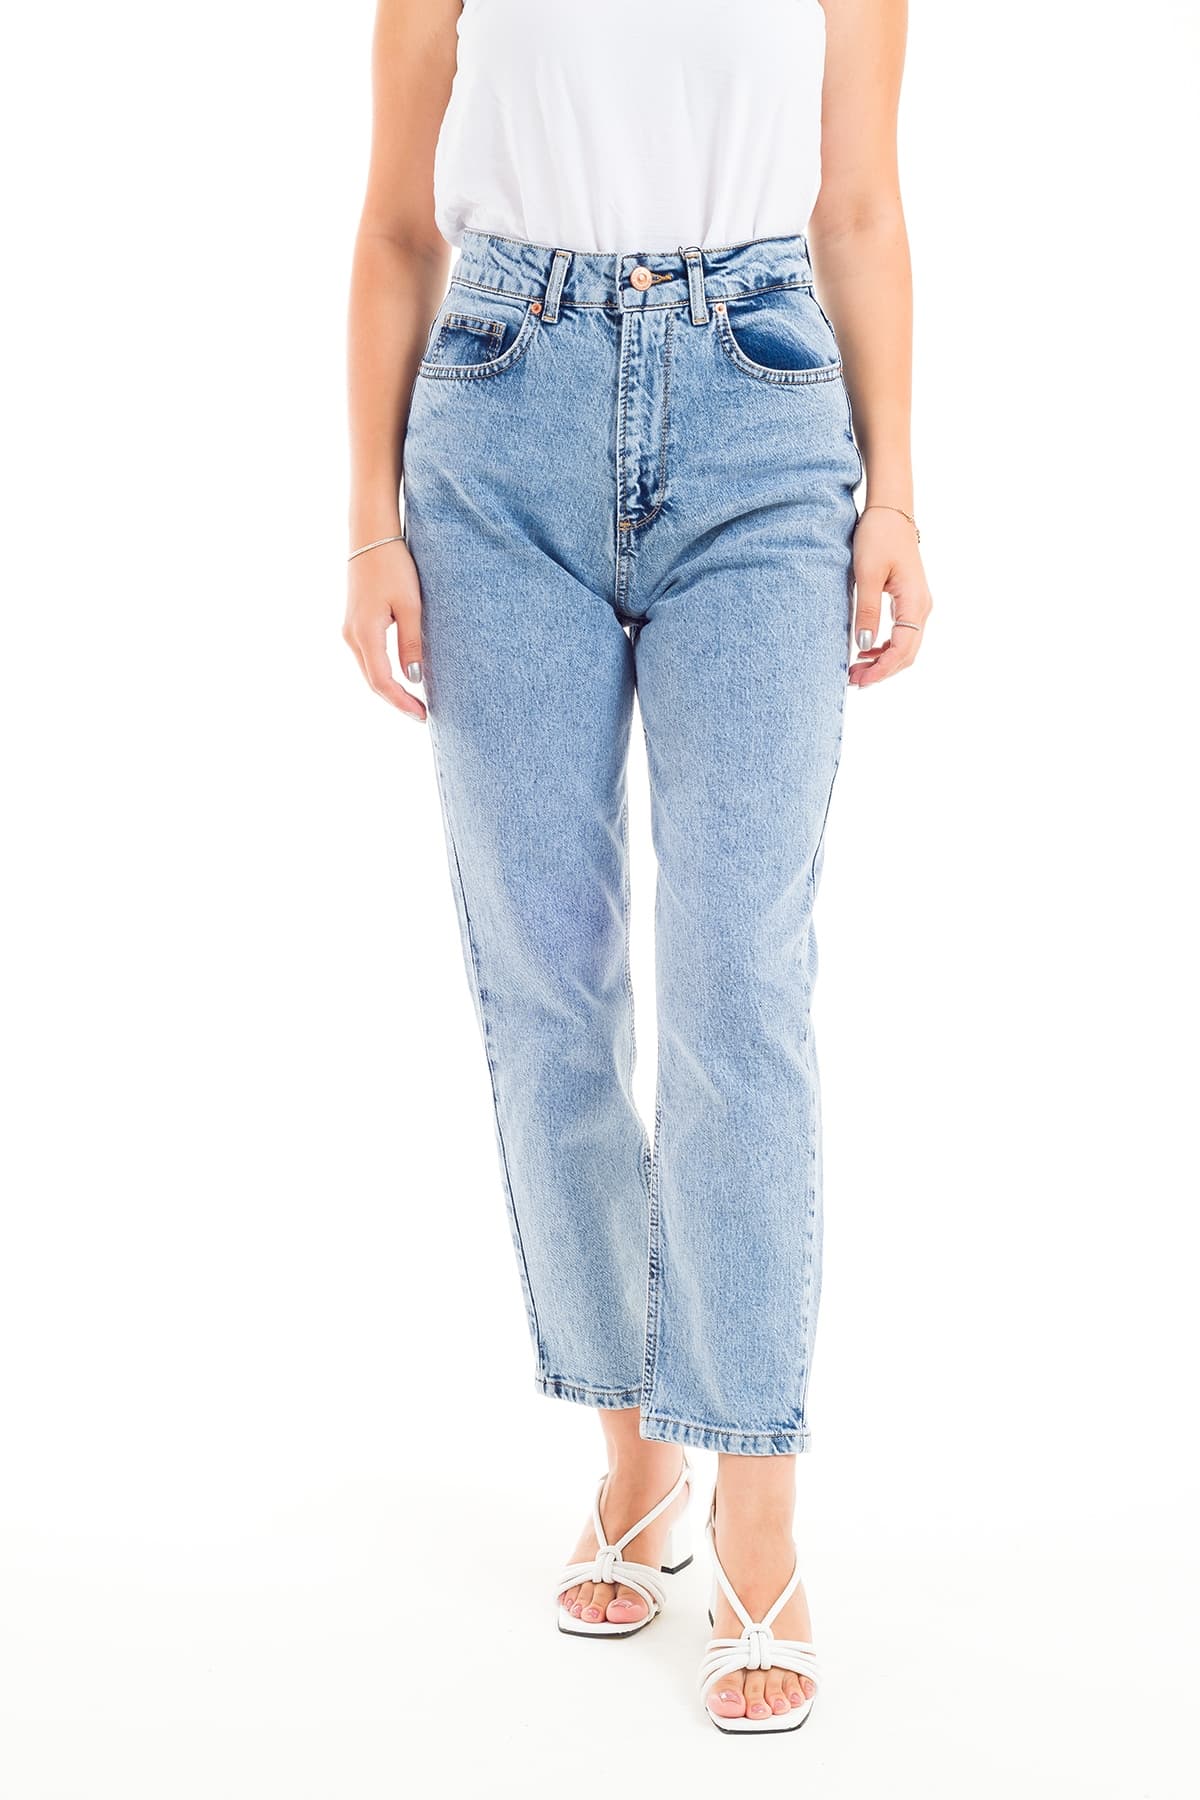 ZDN 9194 Mom Jeans Düz Model Kadın Kot Pantolon